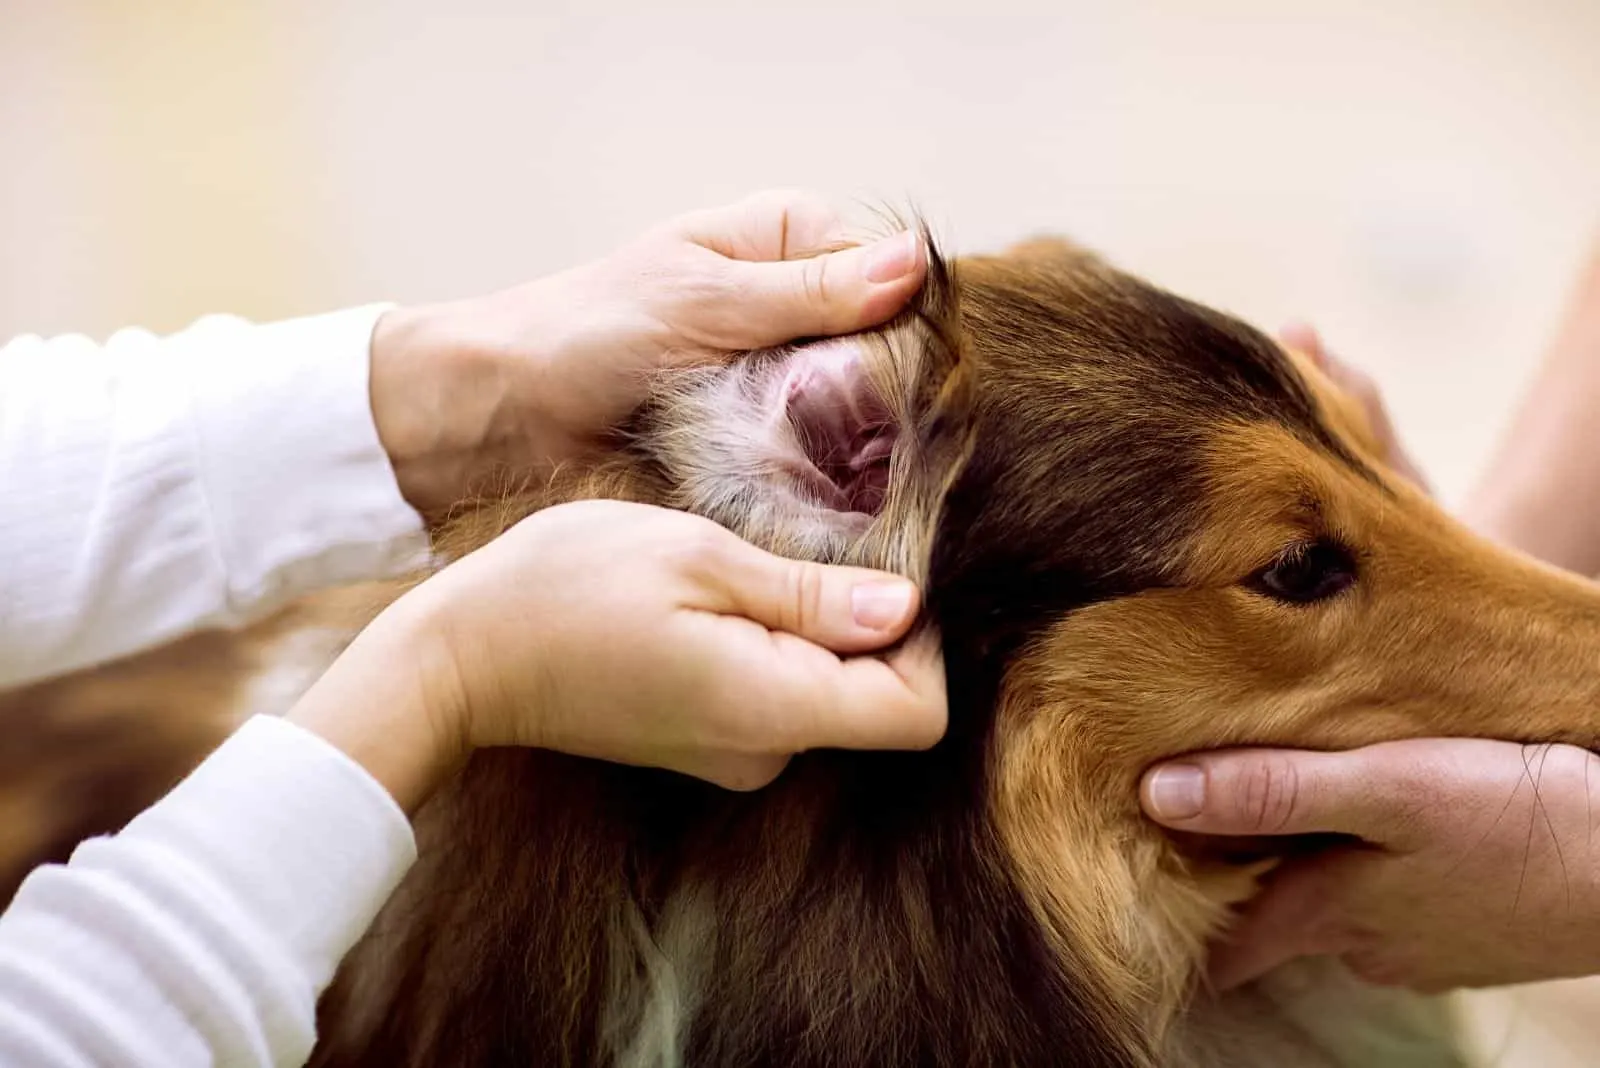 the vet examines the dog’s ears